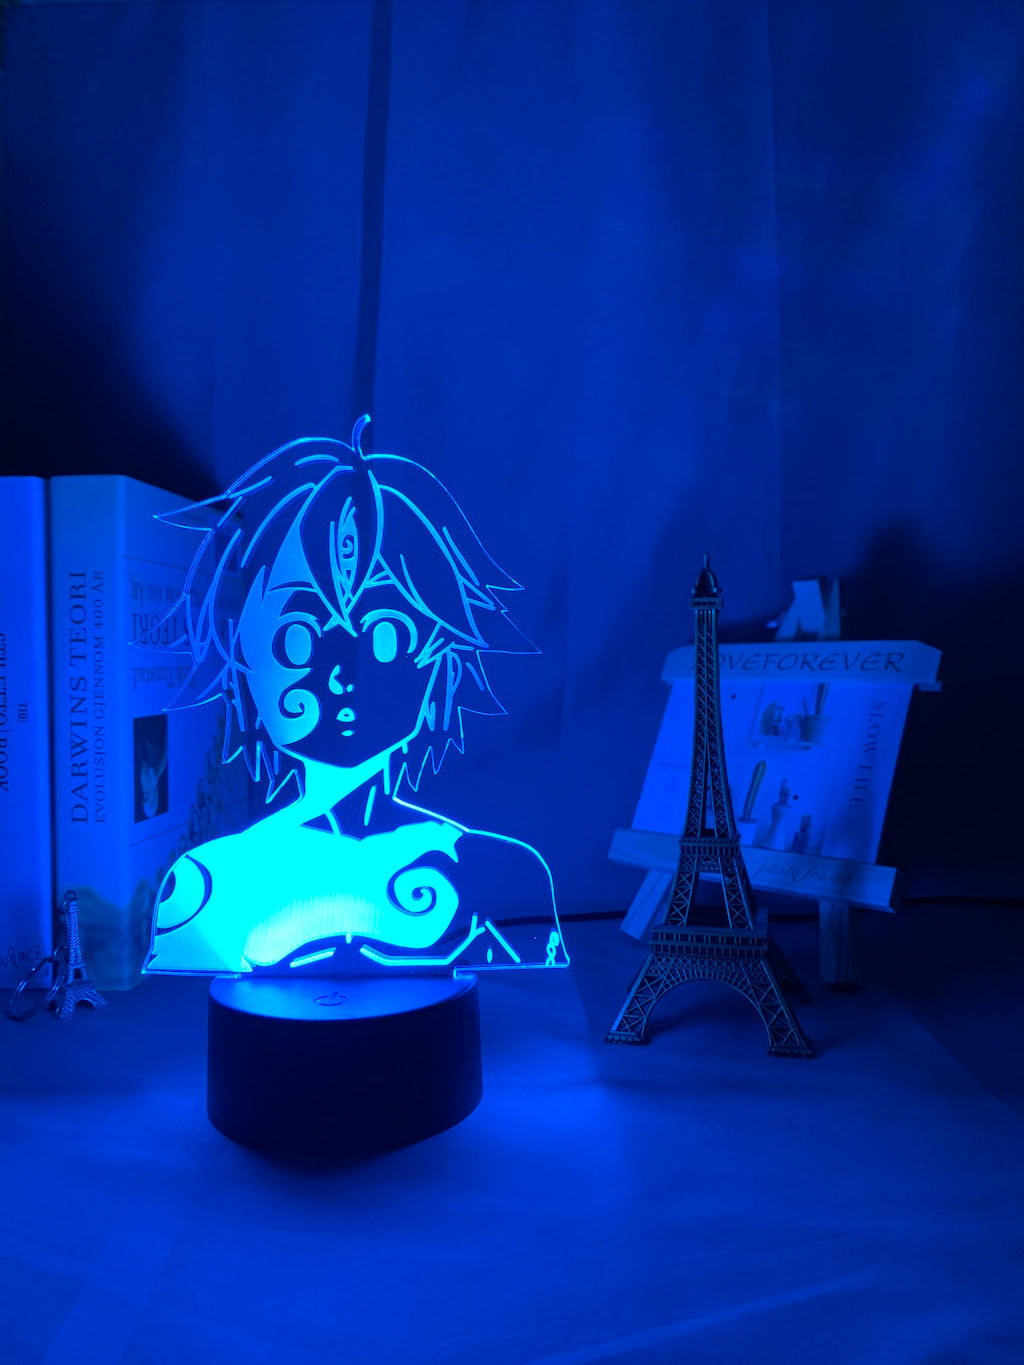 Acrylic Night Light Lamp Manga The Seven Deadly Sins Gadget for Home Room Decorative Light Meliodas Figure Kids Table Lamp Gift